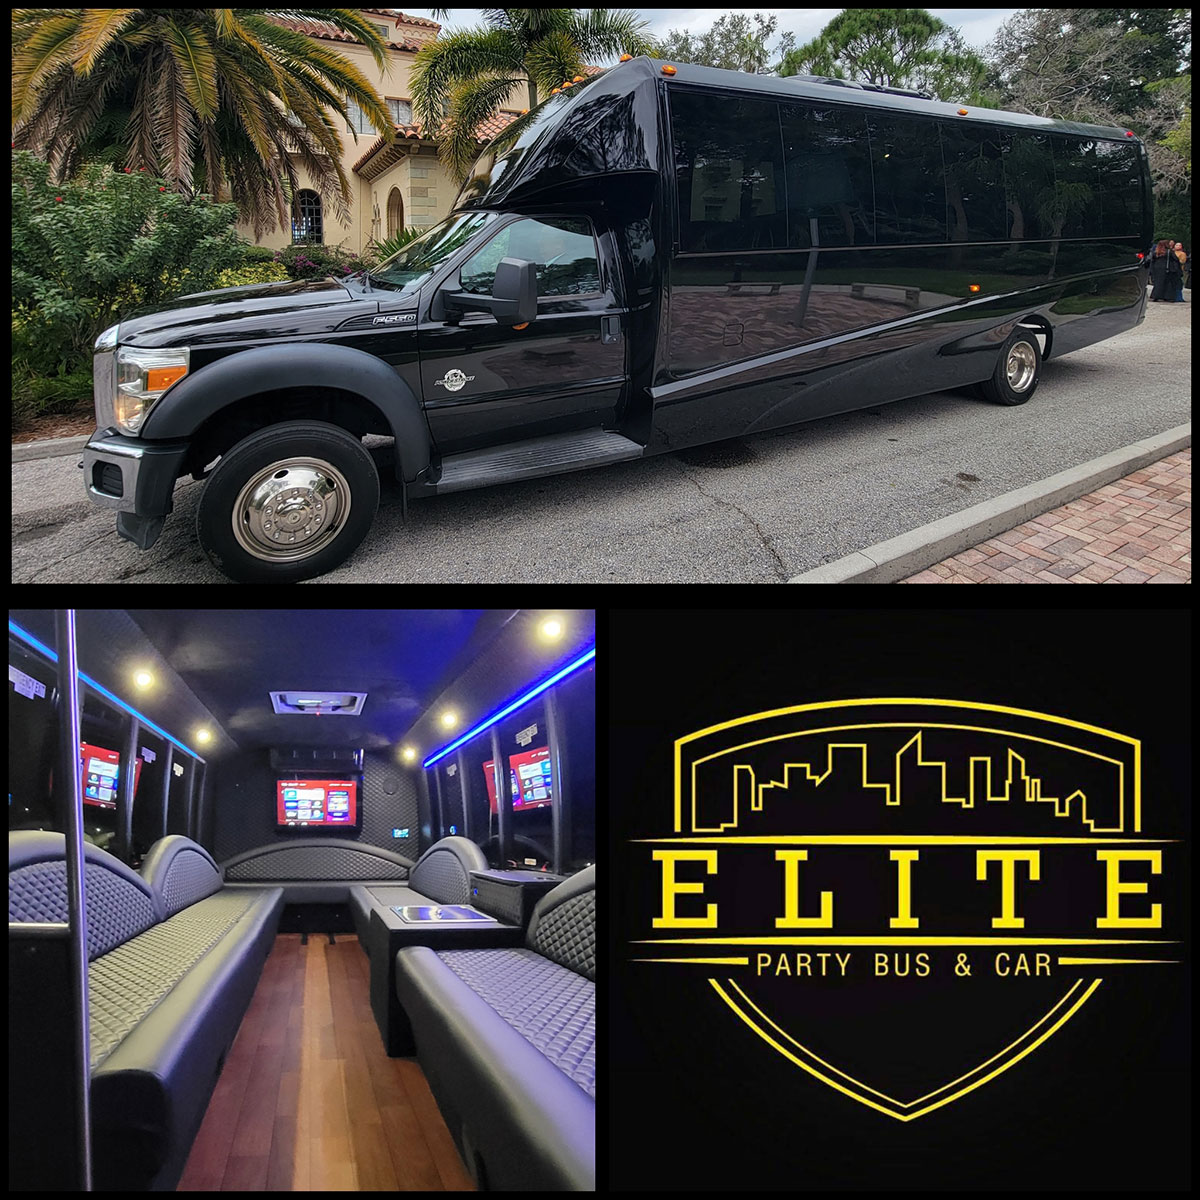 Elite Black F550 Party Bus exterior and interior view